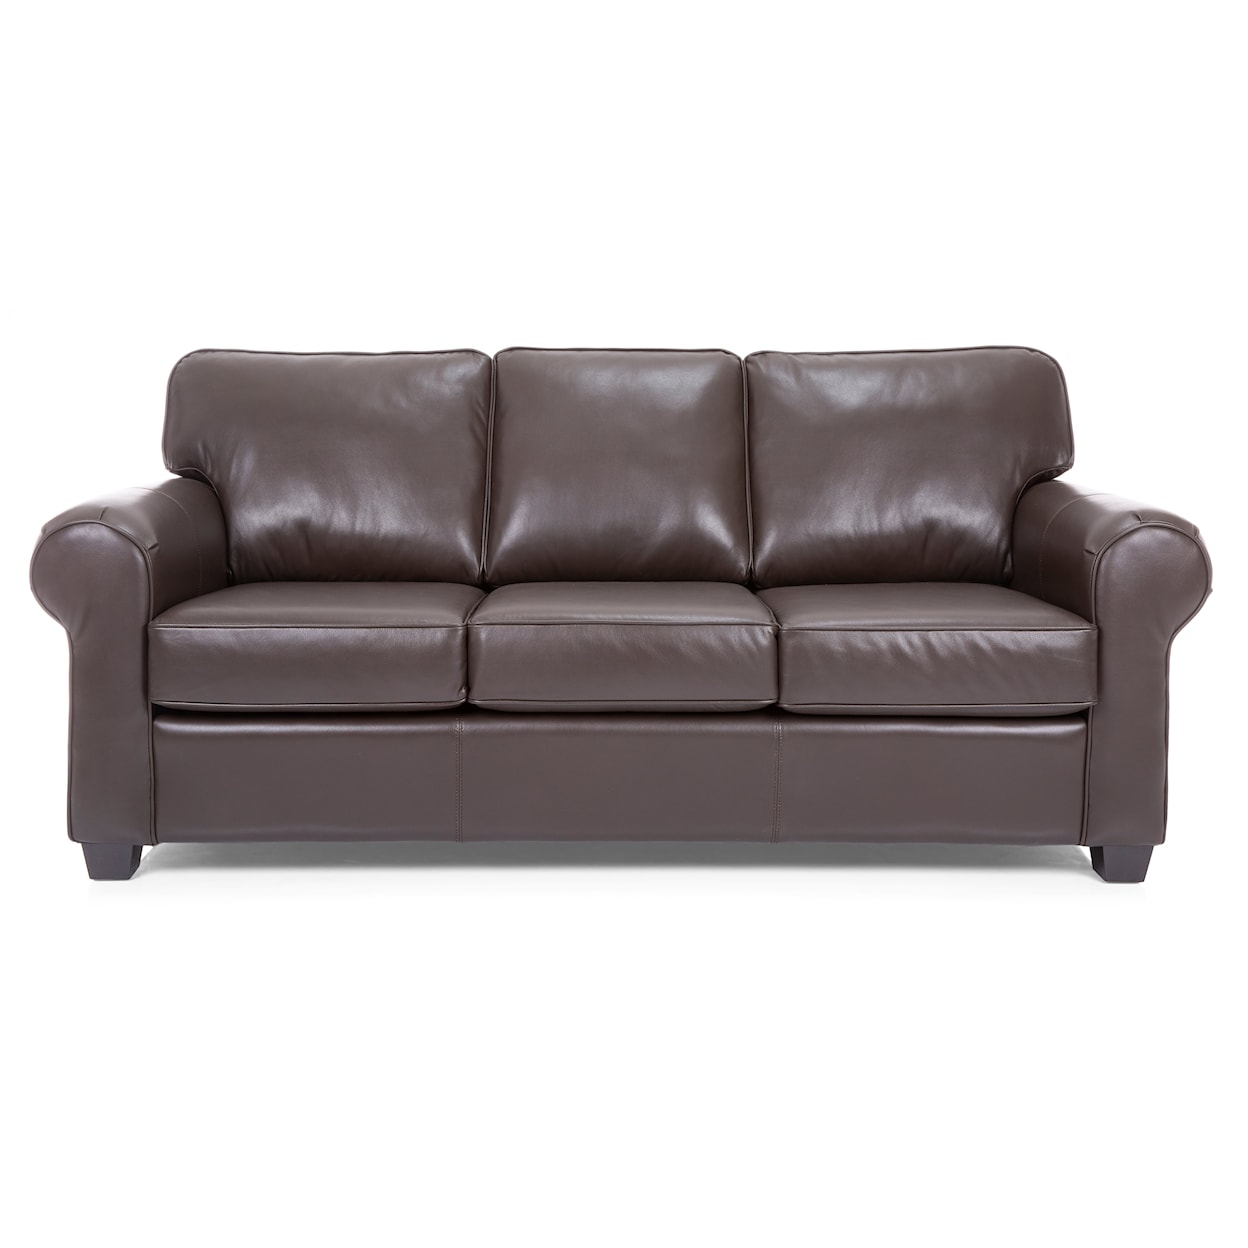 Taelor Designs Khloe Leather Sofa